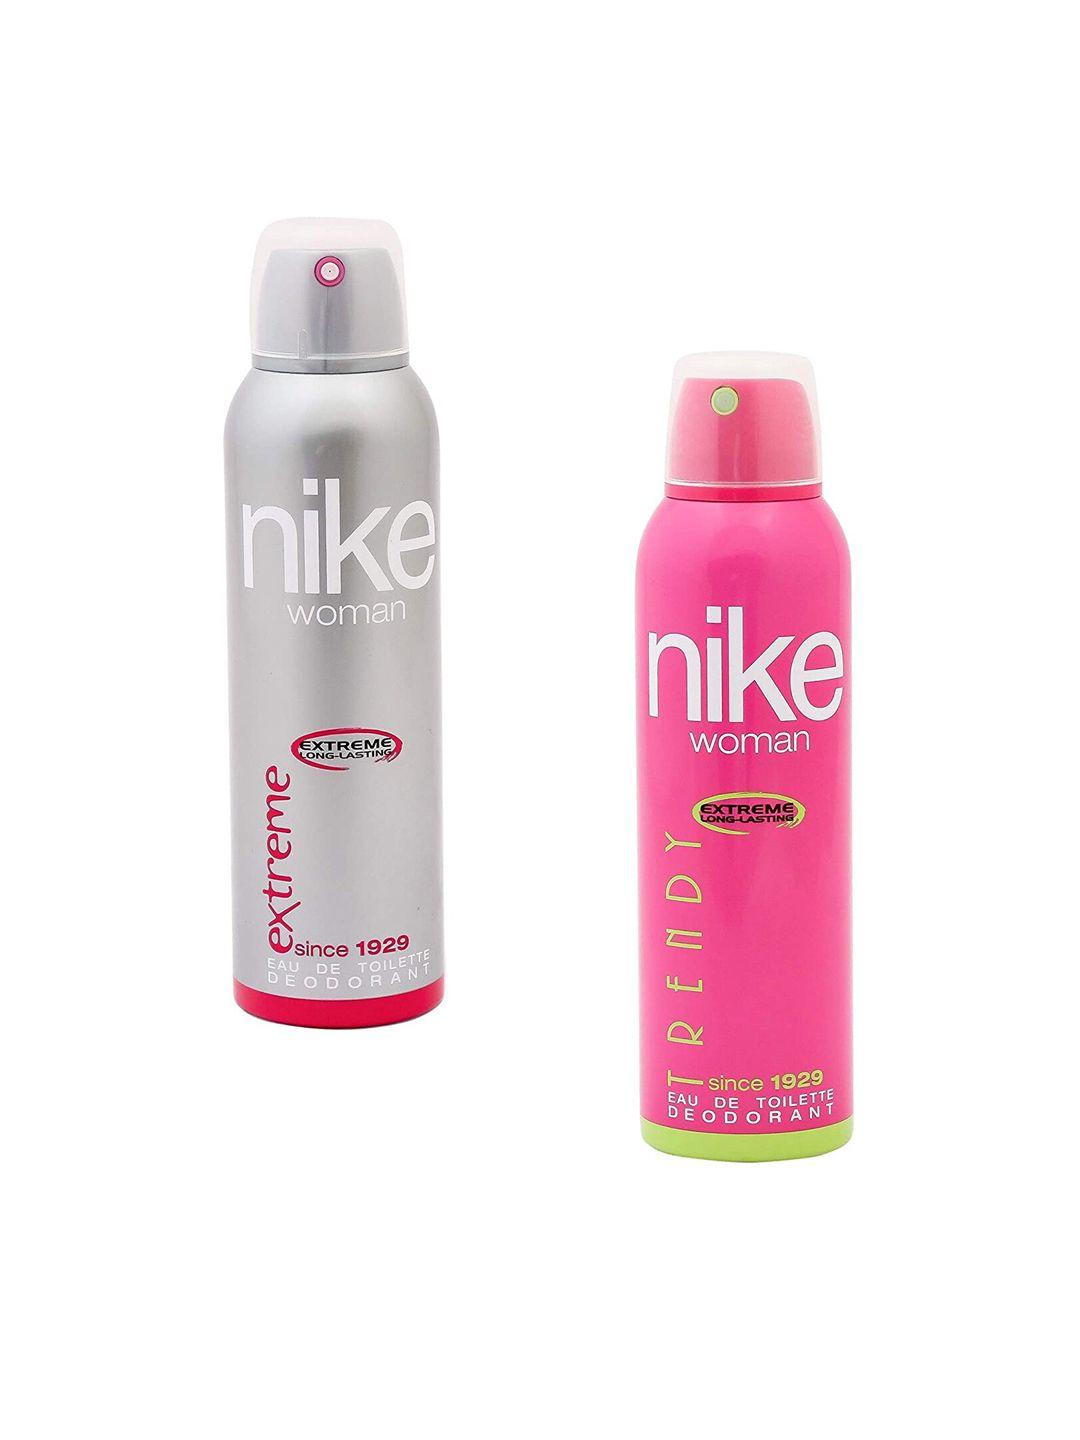 nike woman set of 2 eau de toilette deodorants 200ml each - extreme+trendy